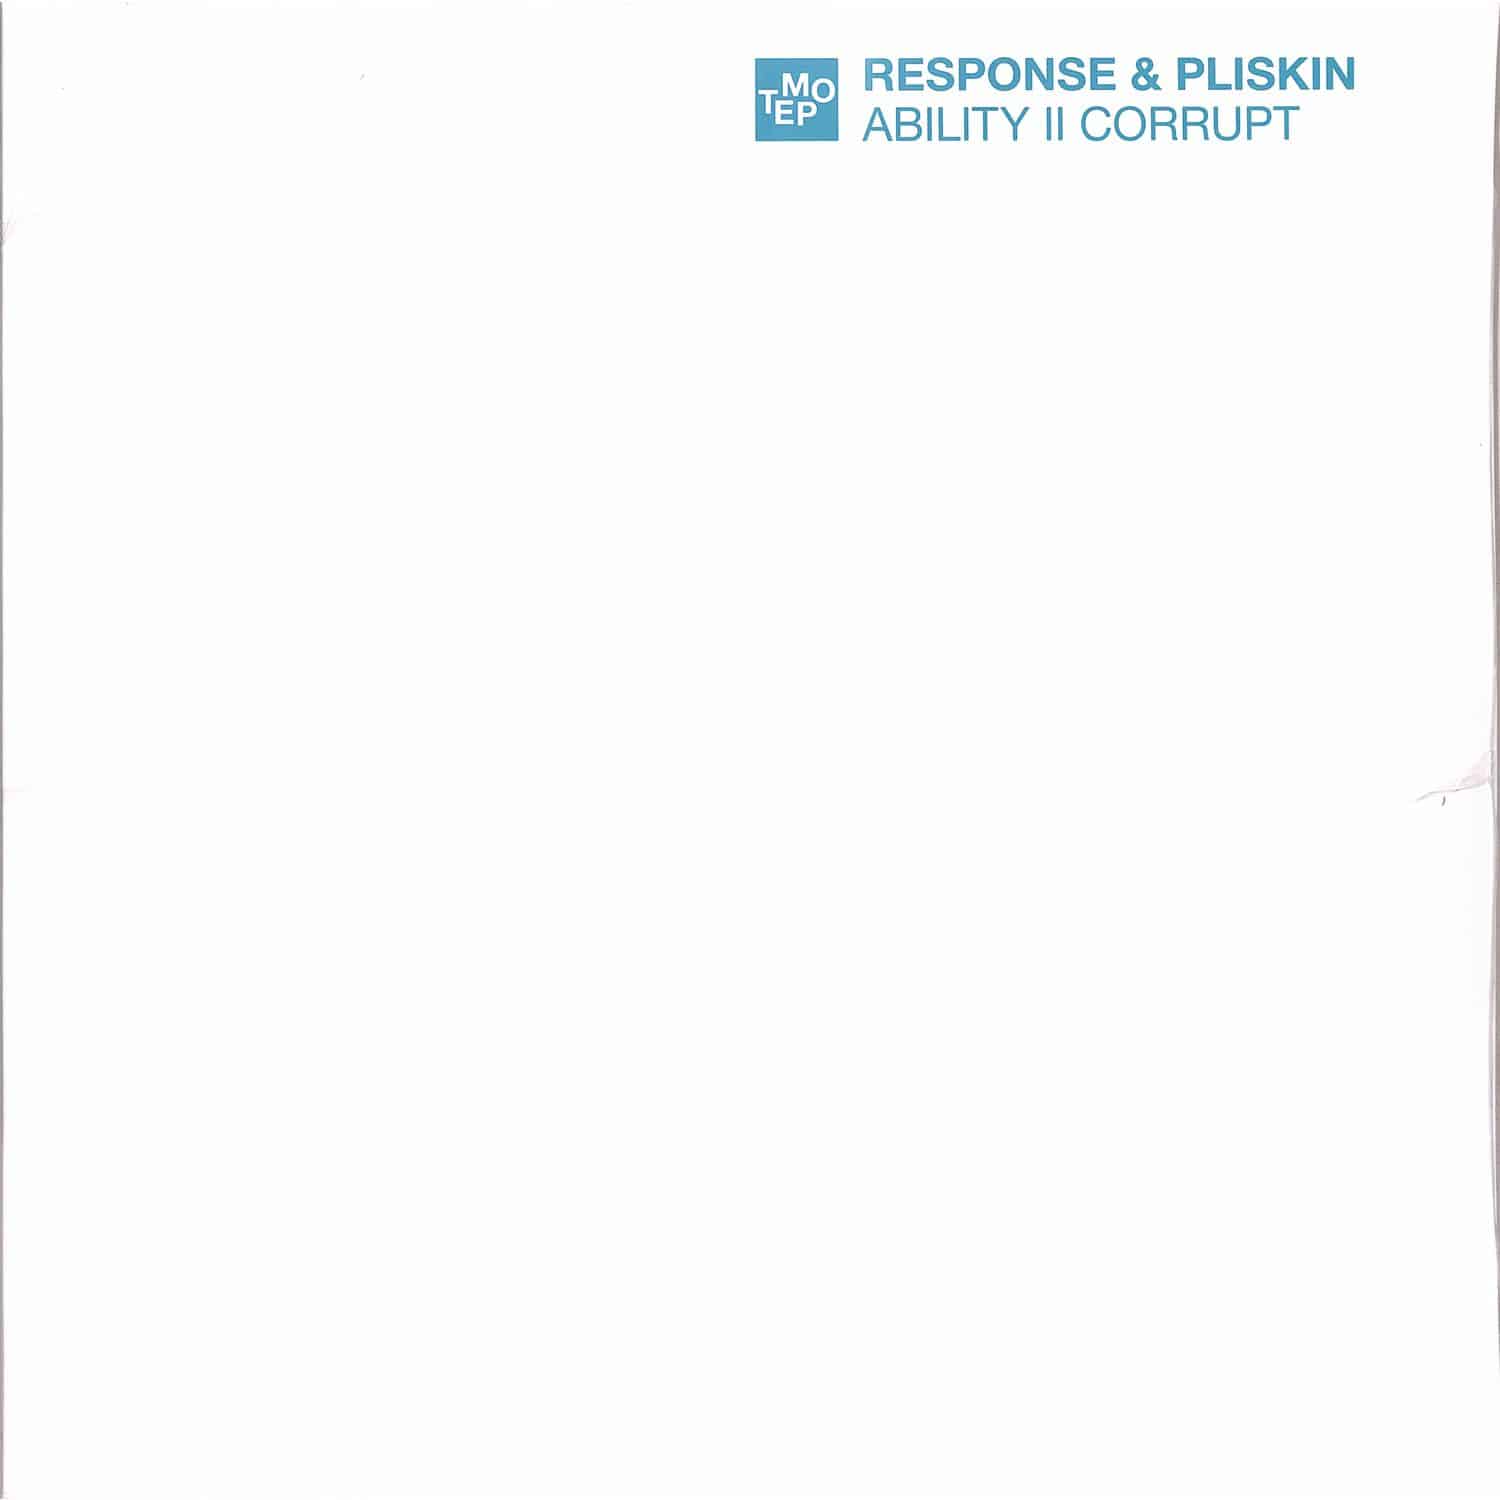 Response & Pliskin - ABILITY II CORRUPT 